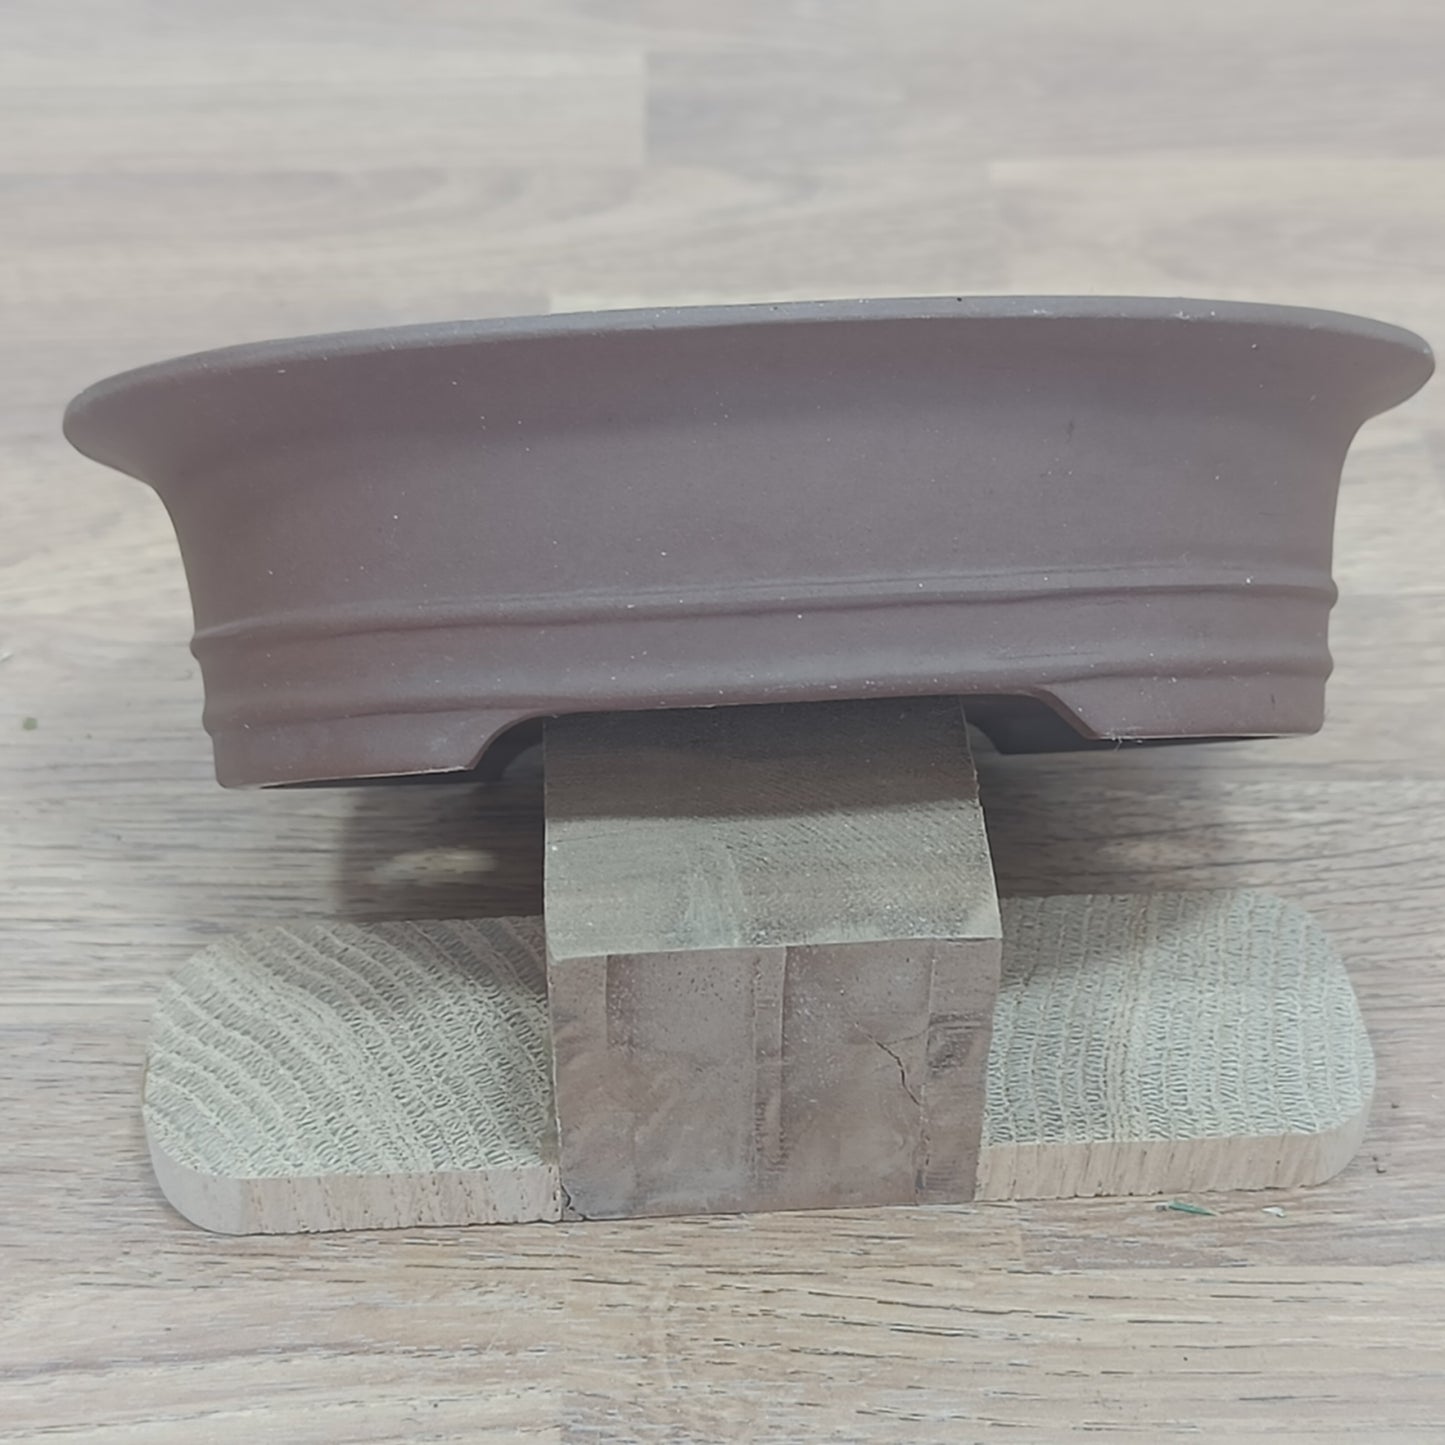 Unglazed Ceramic Oval Bonsai Pot - 15.5cm